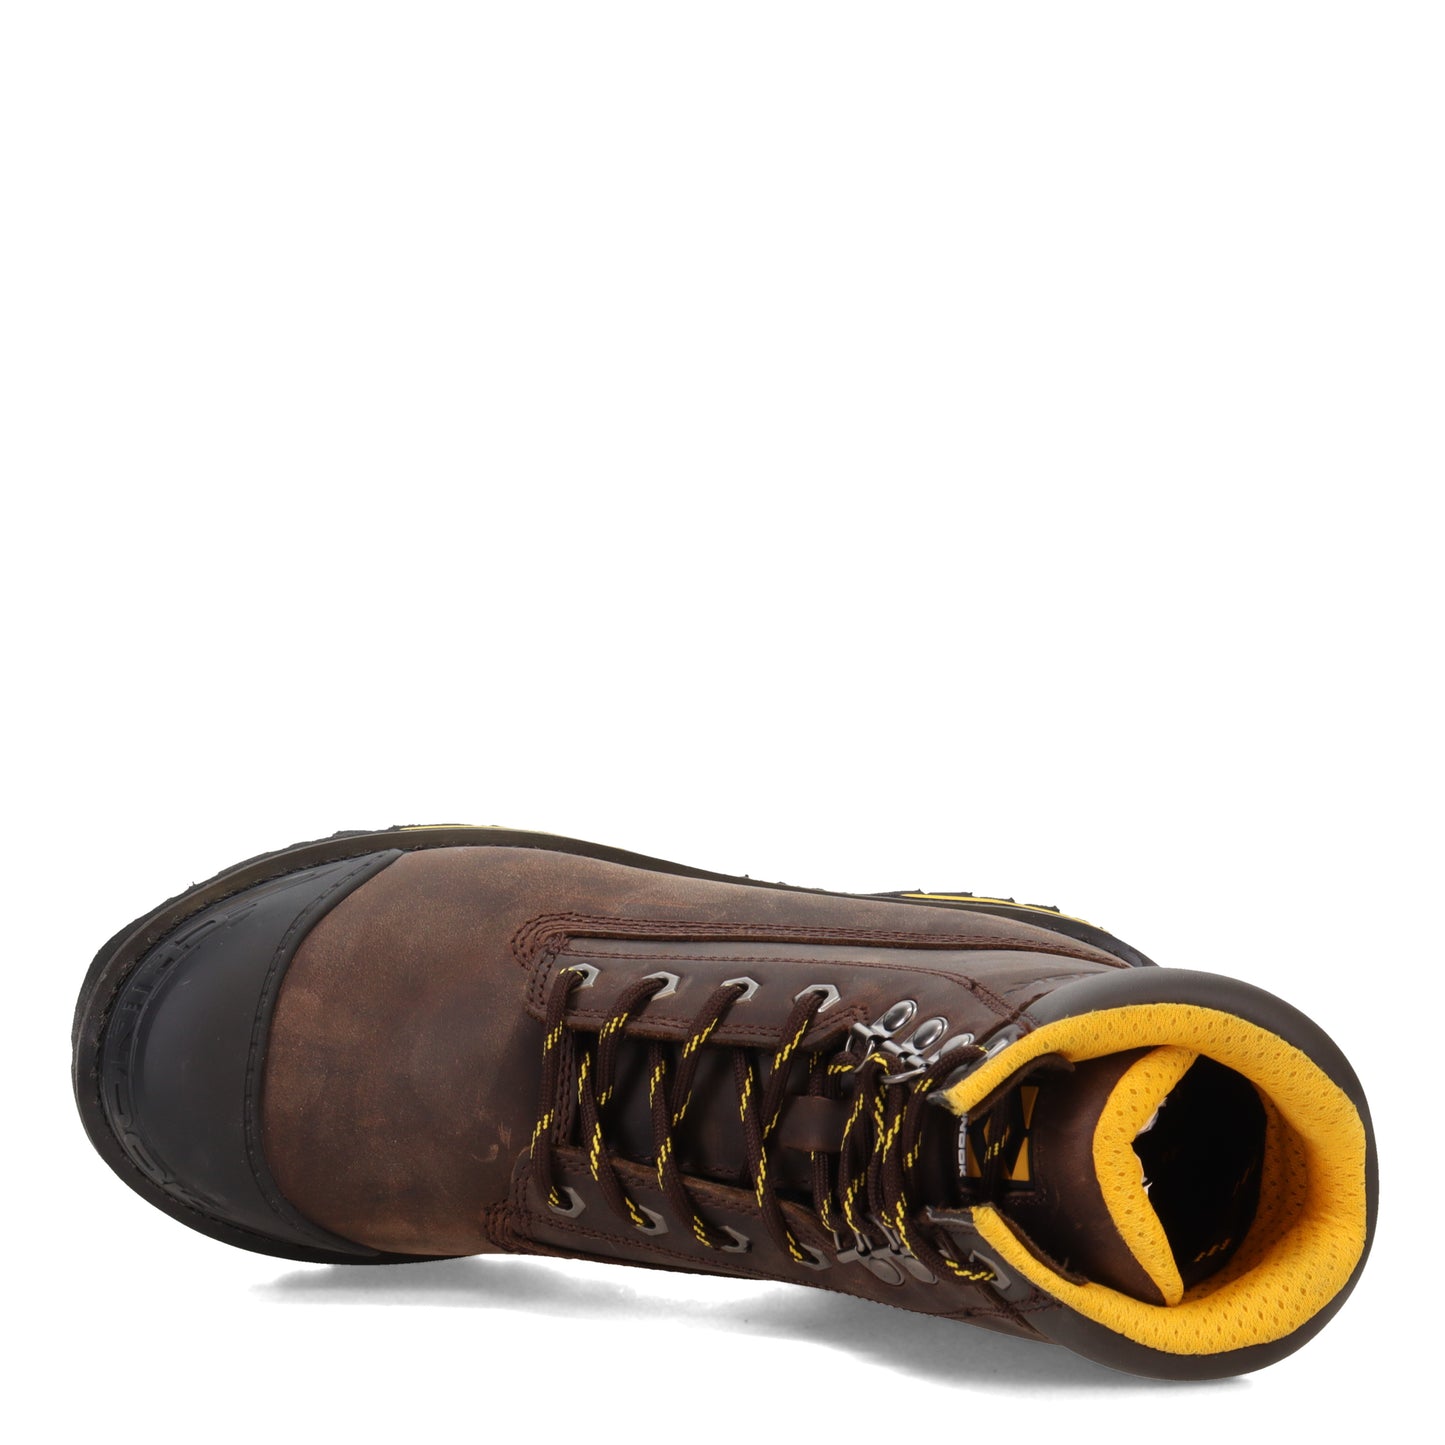 Peltz Shoes  Men's Chinook Tarantula 8in Steel Toe Boot BROWN 8490B